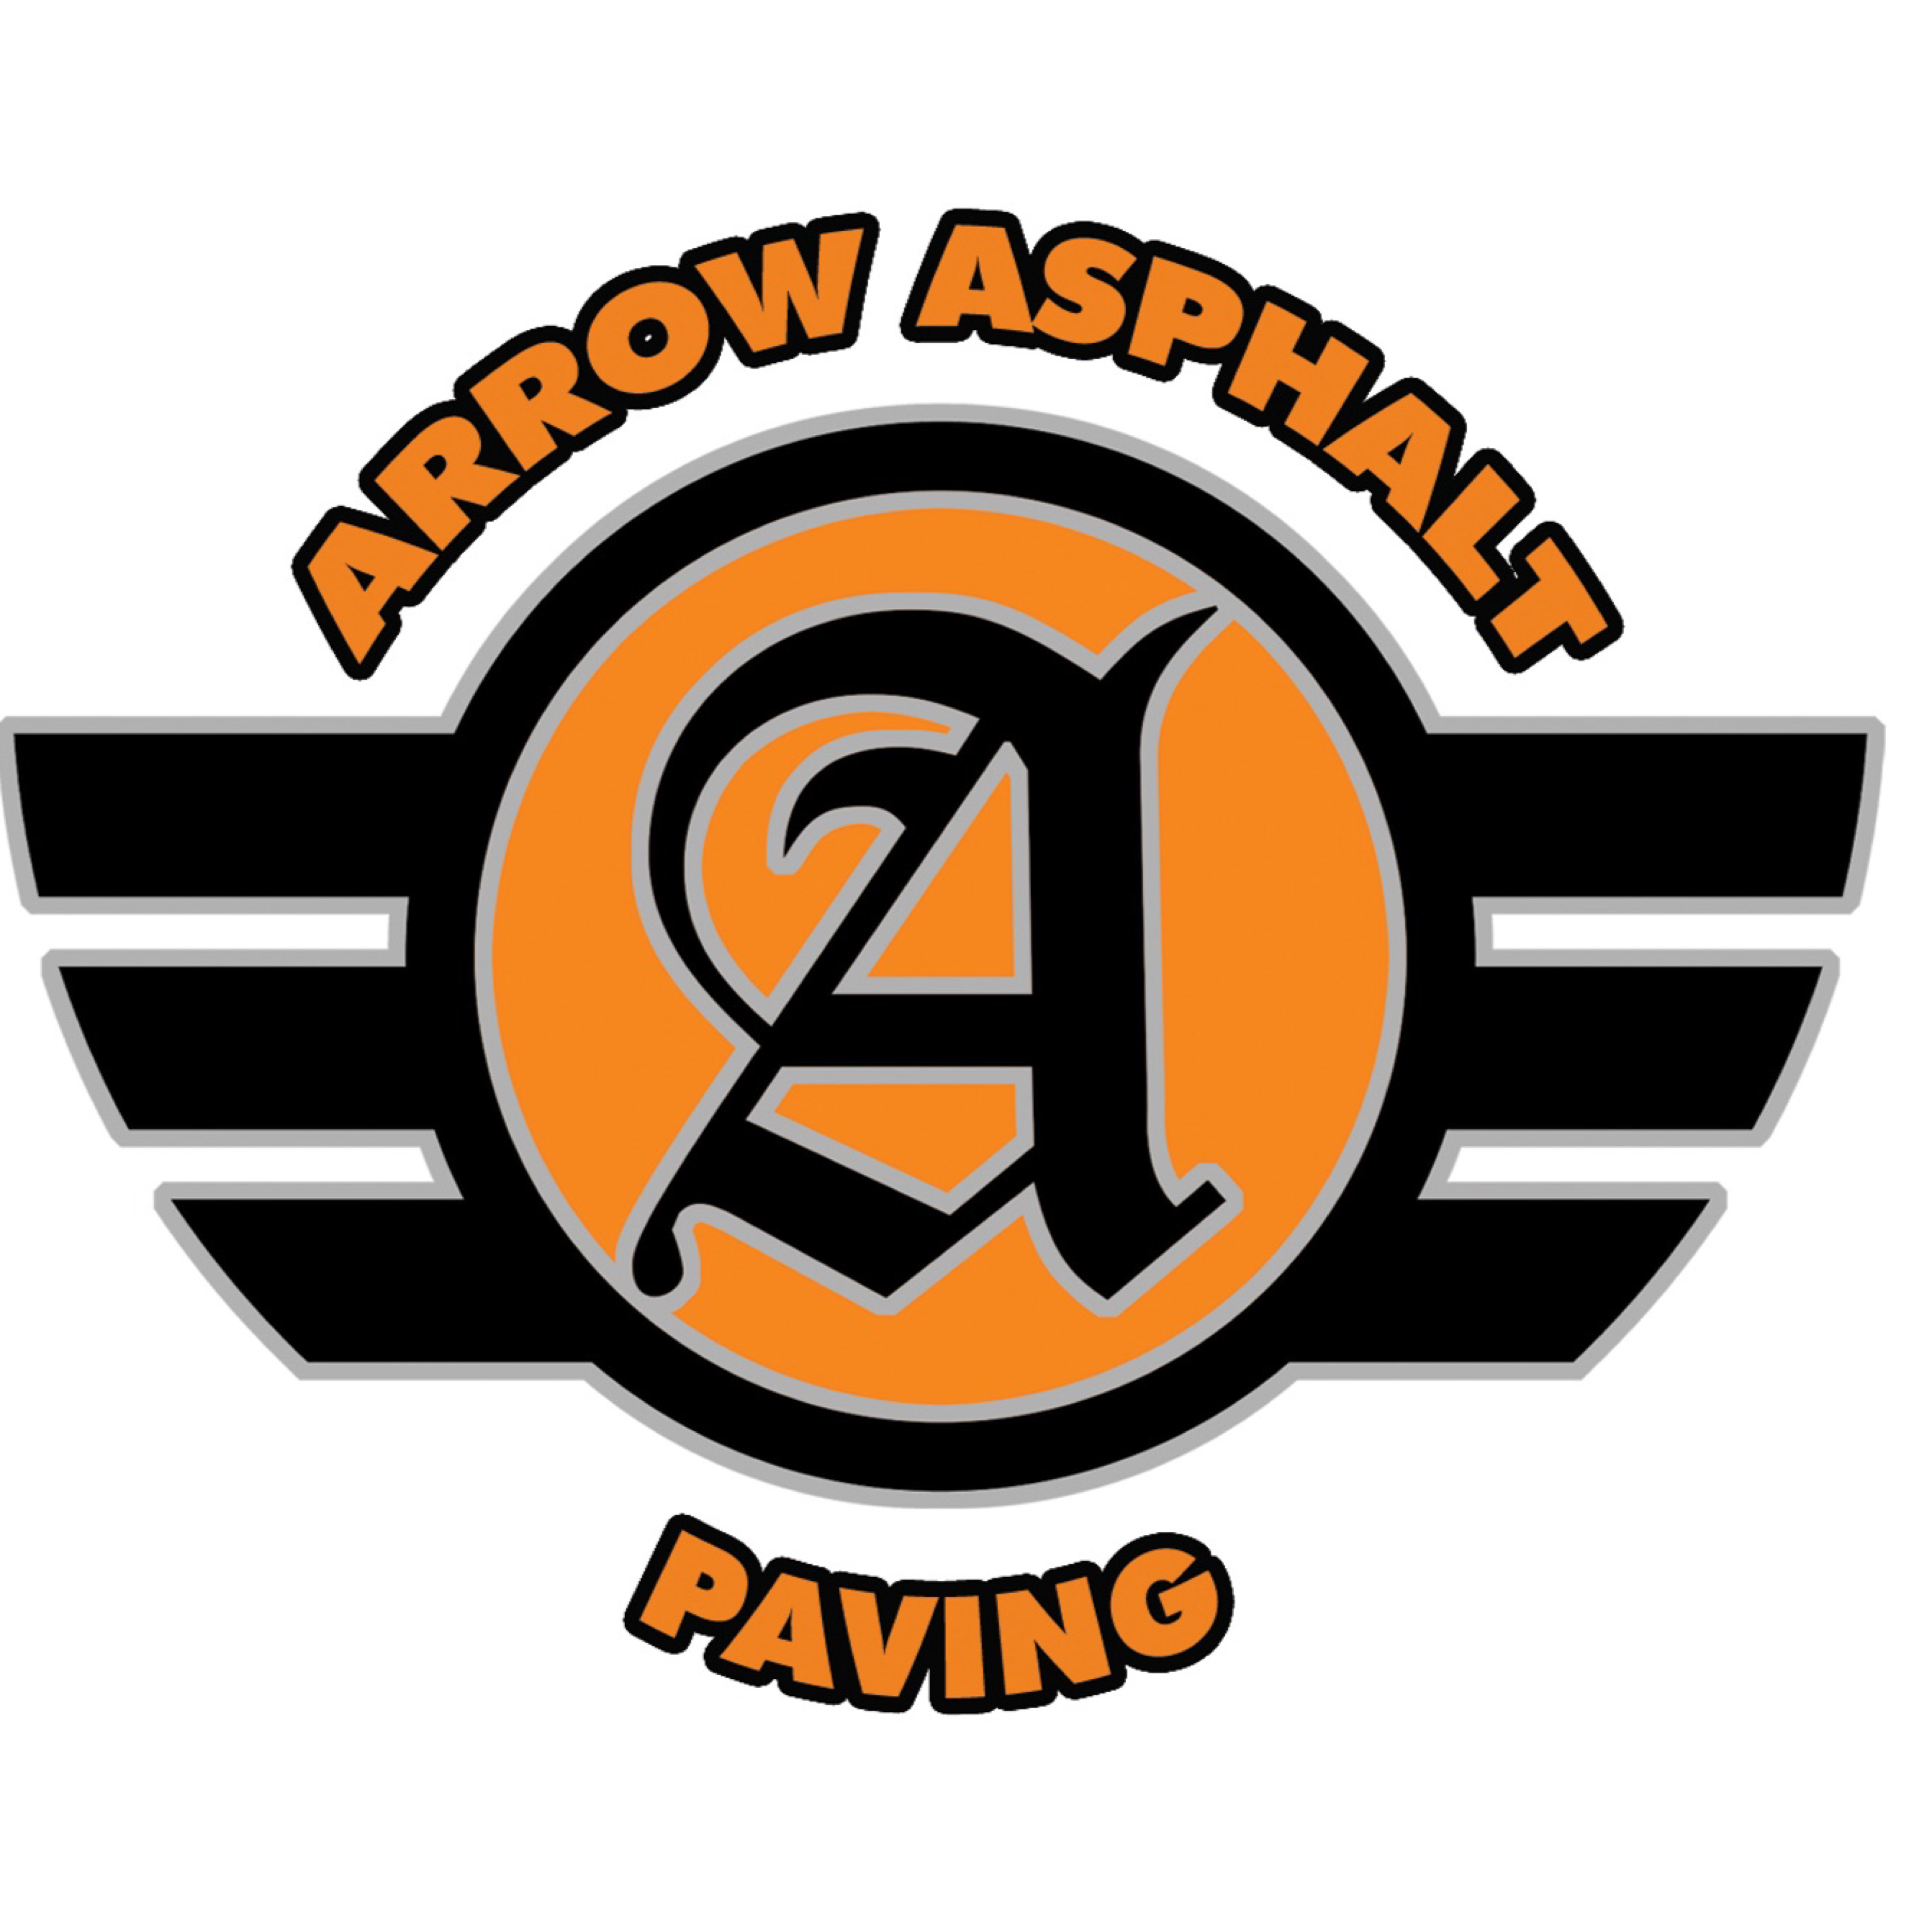 Arrow Asphalt Paving Logo